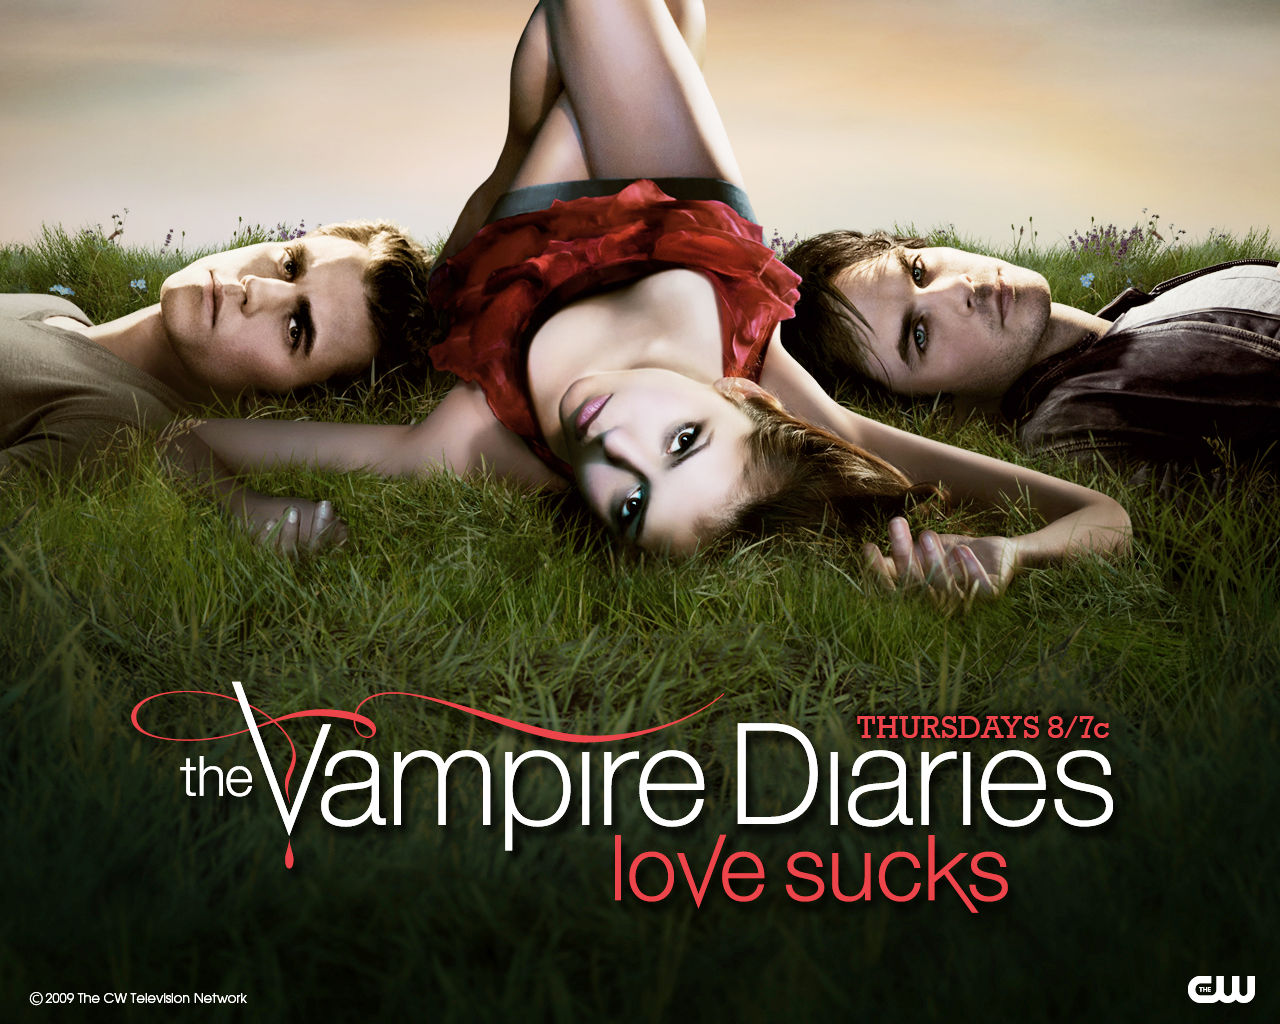 The Vampire Diaries Heart of Darkness (TV Episode 2012) - Matthew Davis as Alaric  Saltzman - IMDb